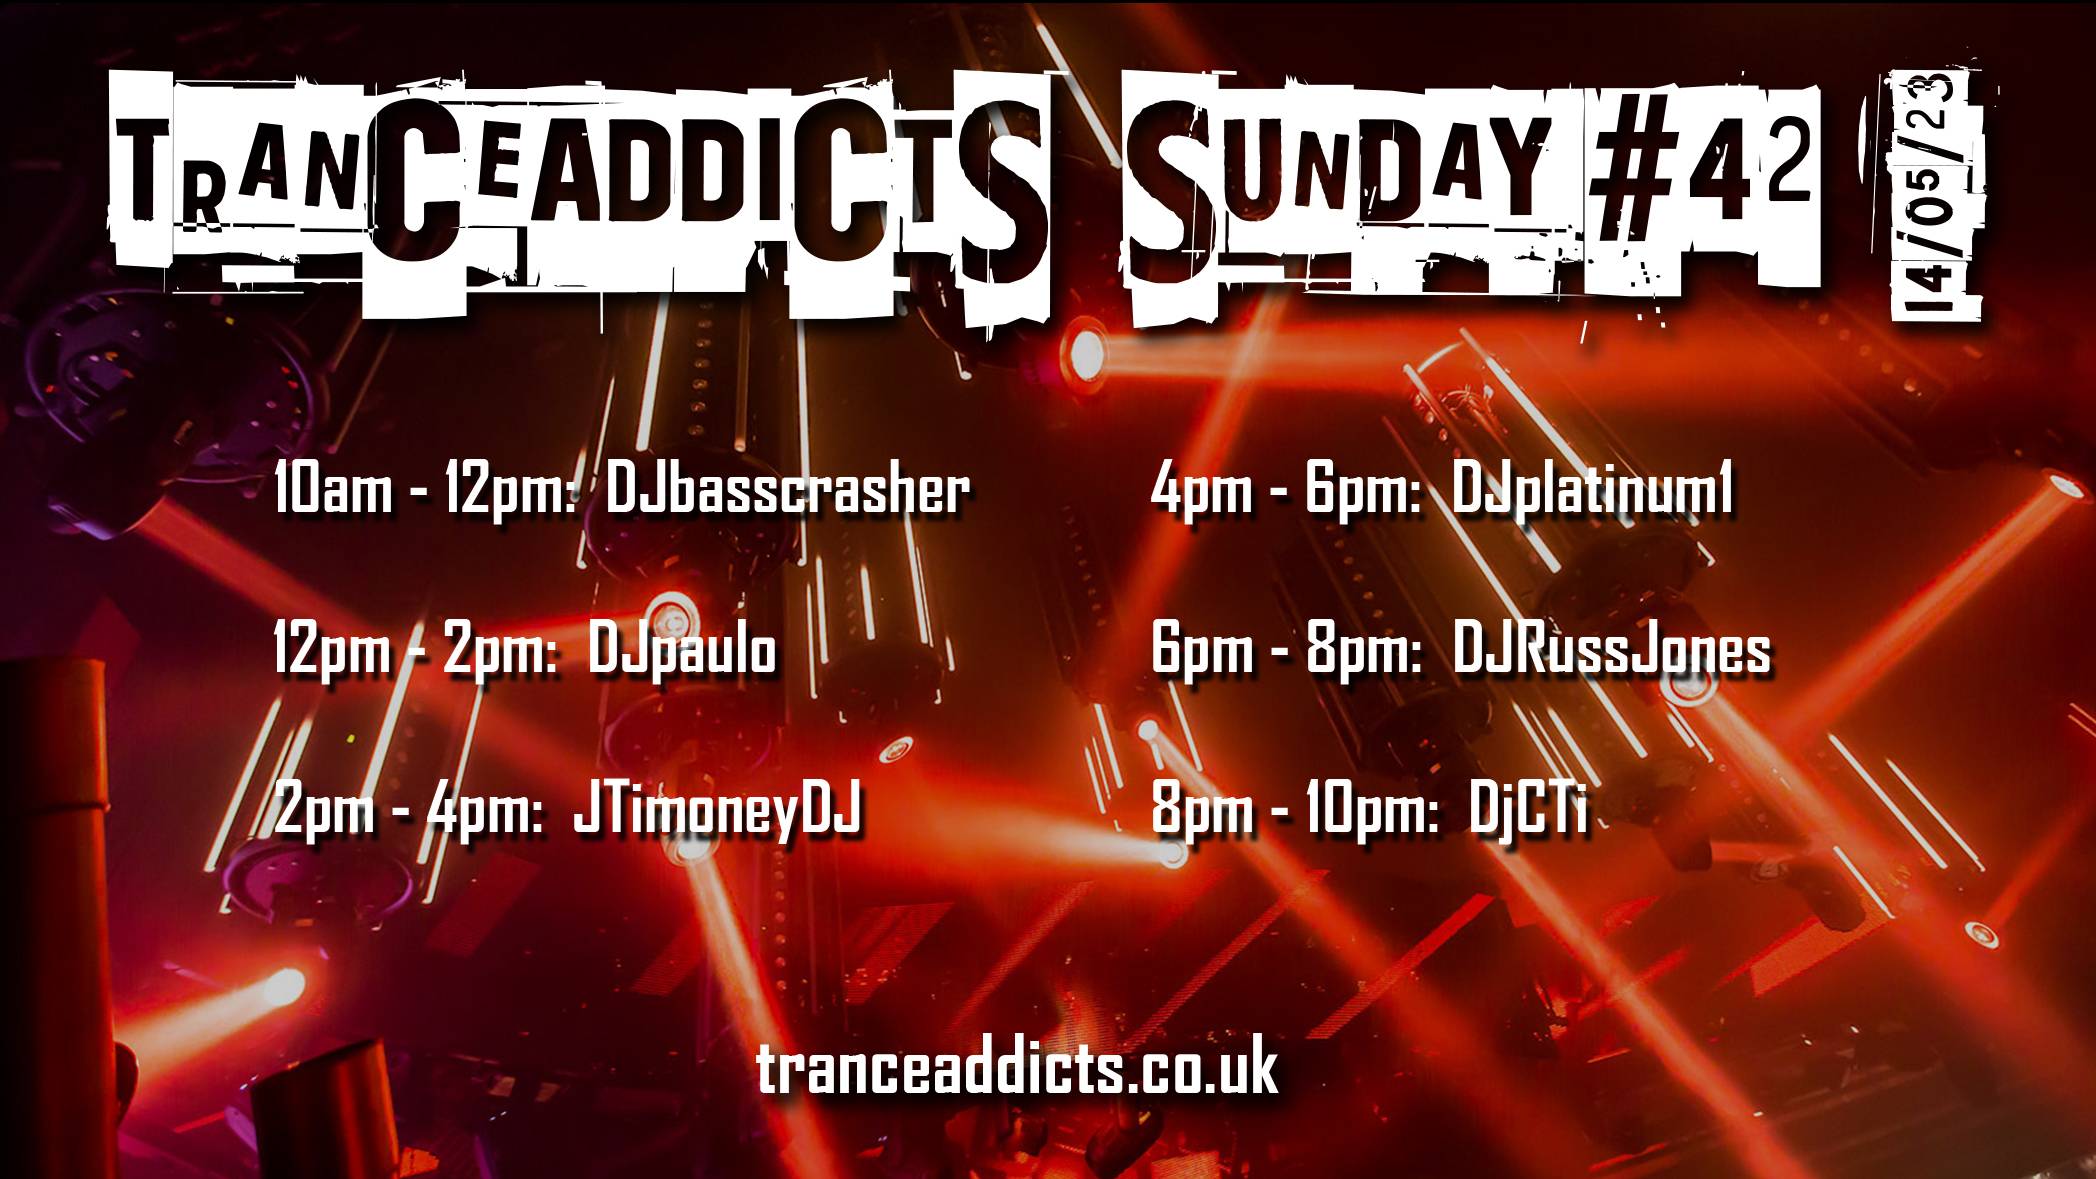 TranceAddicts Sunday #42